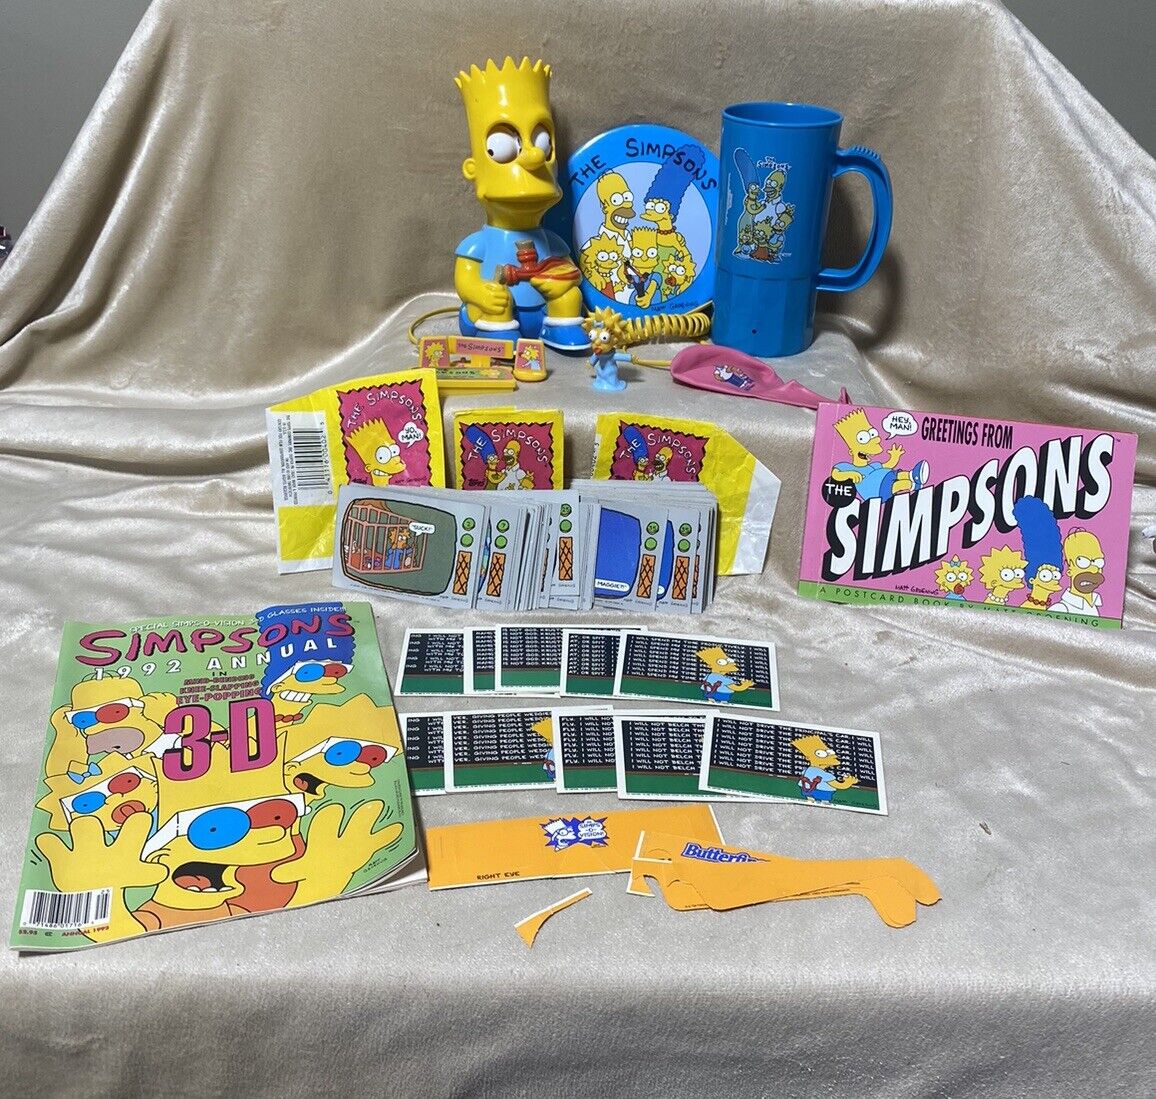 Vintage 1990’s “The Simpsons” Memorabilia